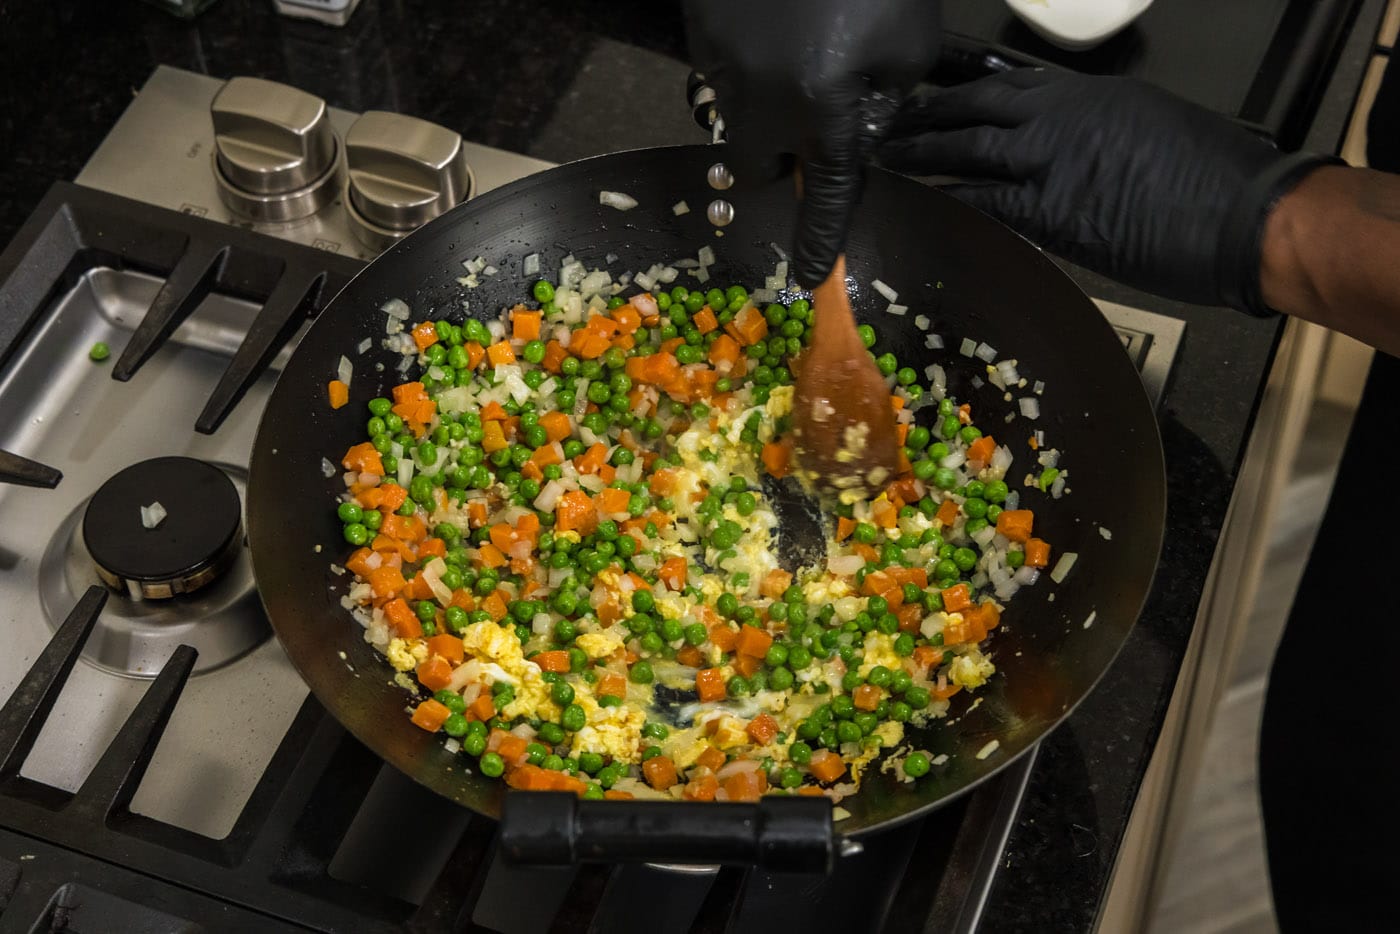 stirring cooked egg into stir fry vegetables